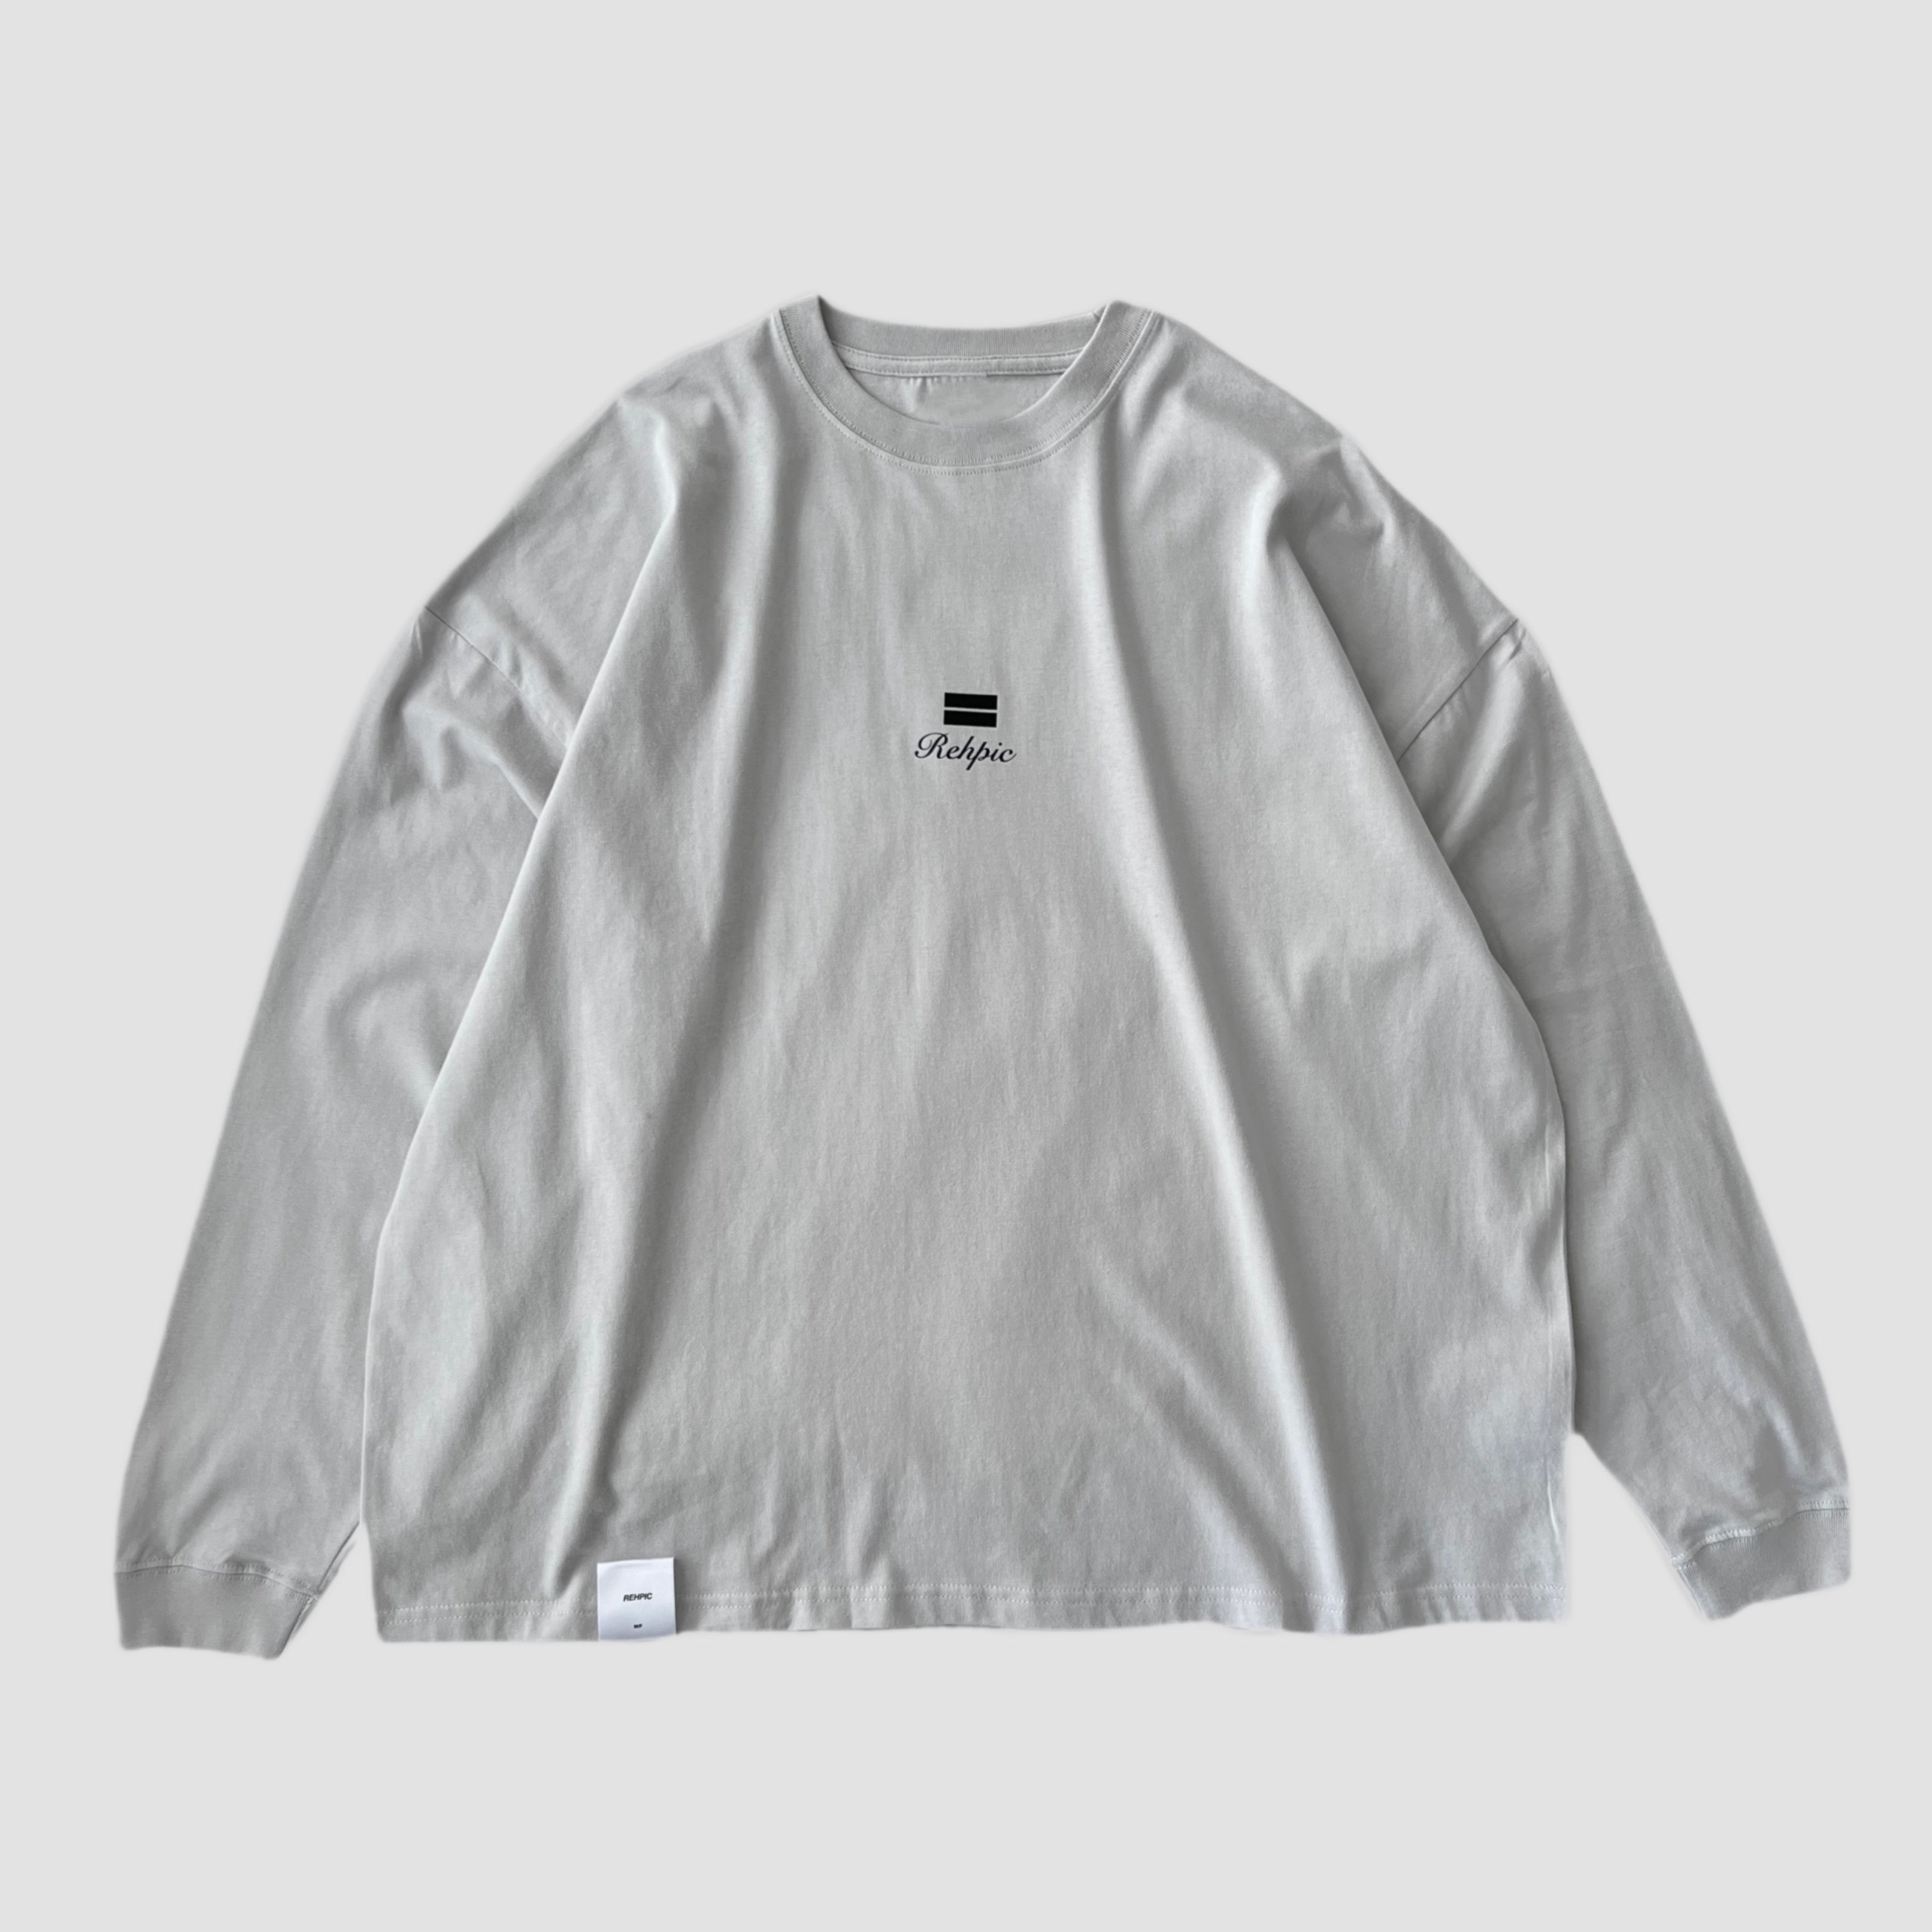 WTAPS SPEC.DESIGN LS 01 TEE ブラック - Tシャツ/カットソー(七分/長袖)